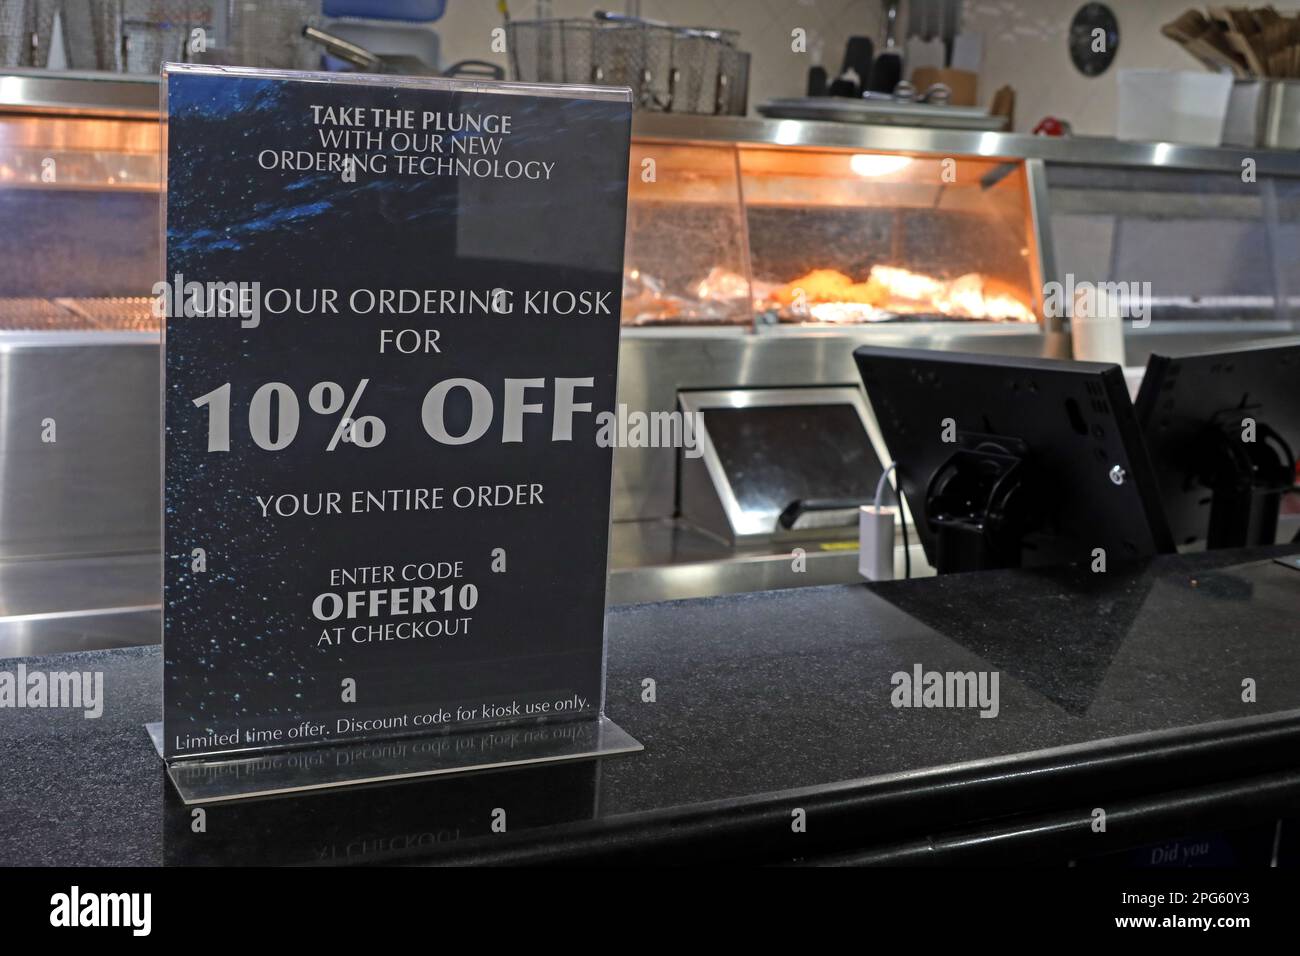 Deep Blue chippy ordering technology, 10% discount, Fish bar, 7-8, Bridge St, Godalming, Waverley, Surrey, England, UK,  GU7 1HY Stock Photo